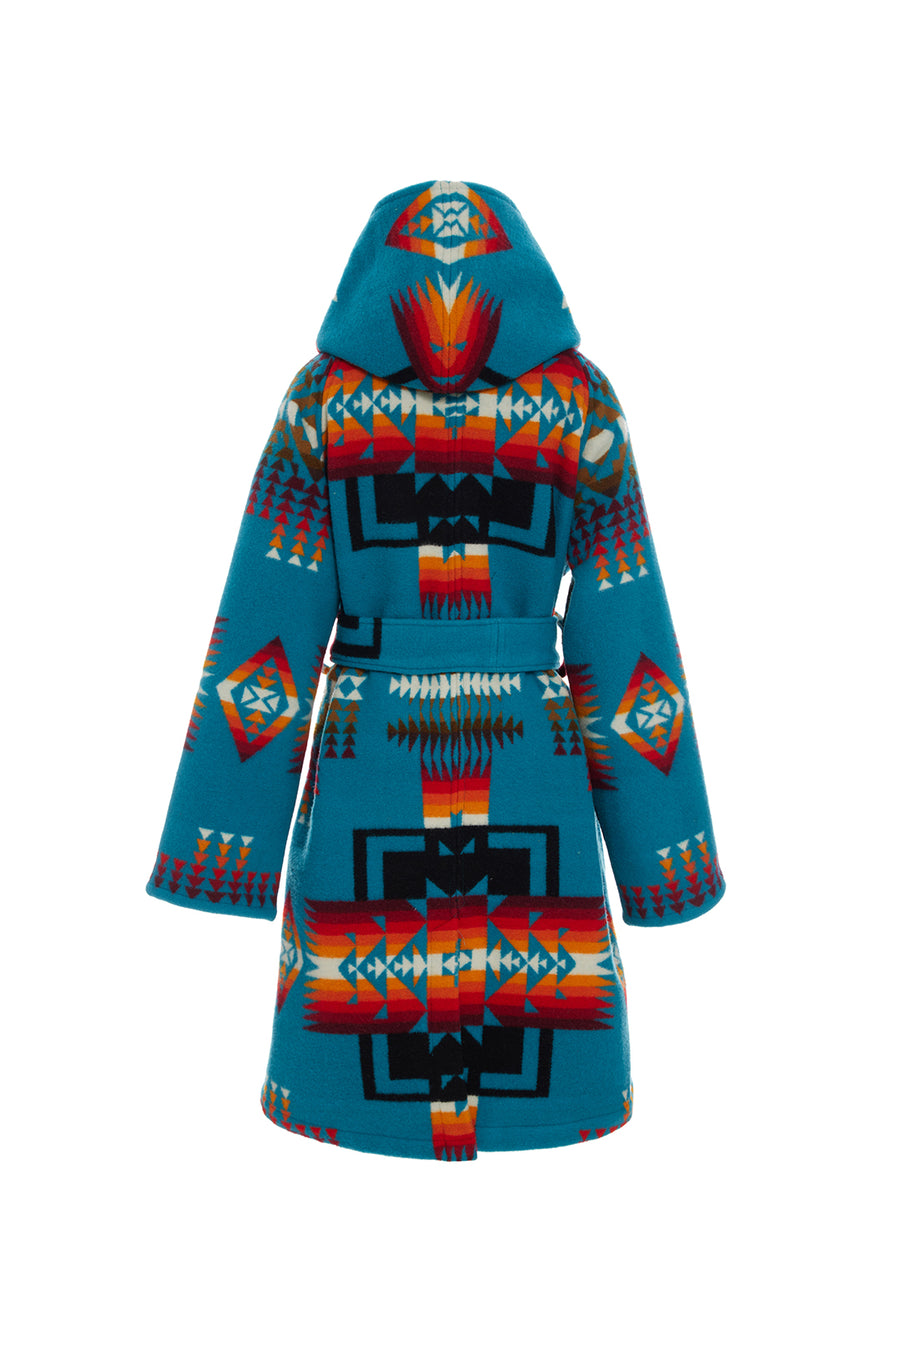 Chief Joseph Classic Robe